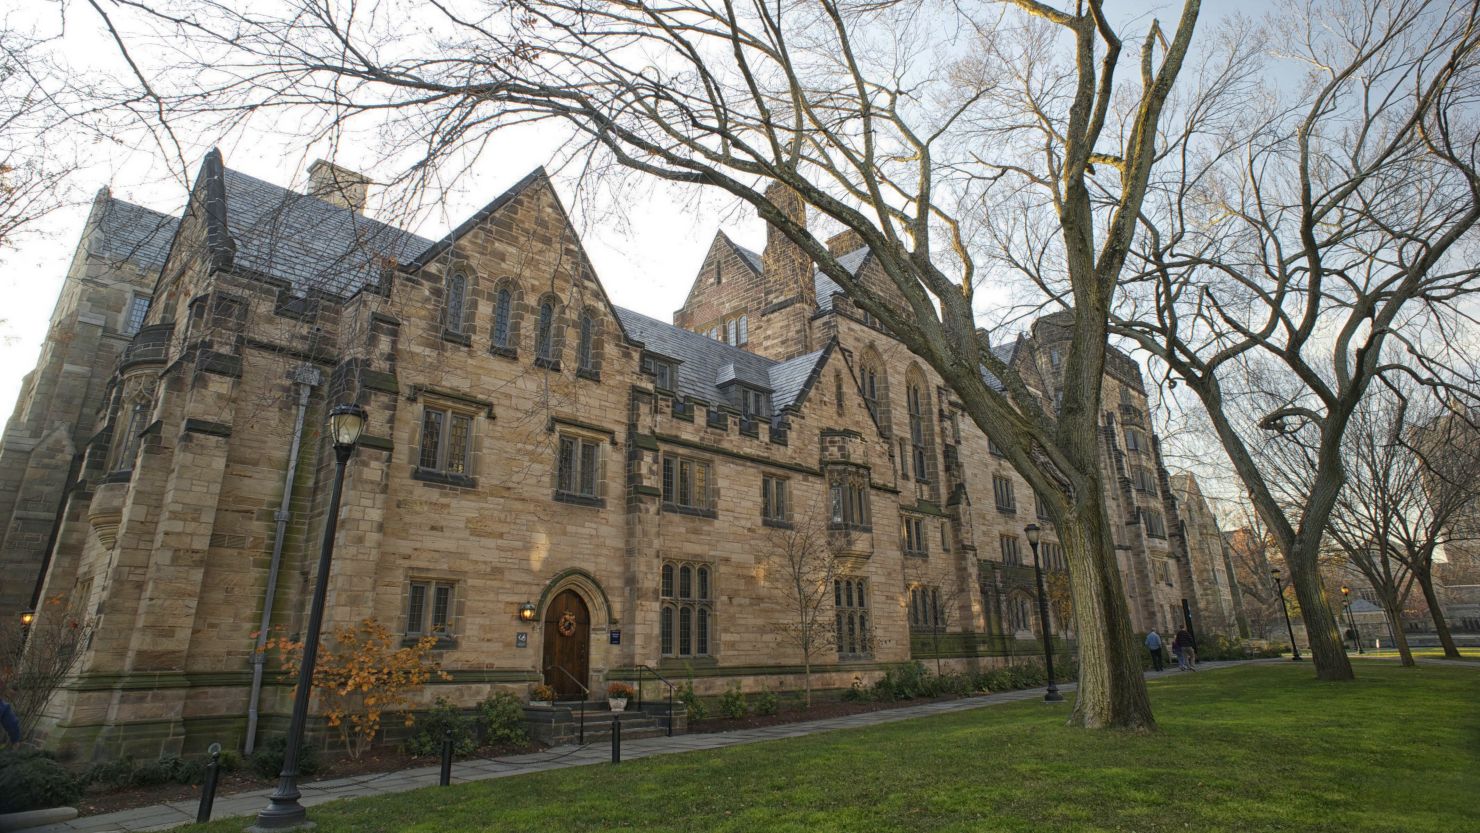 Calhoun College, built in 1933, was named for Yale alumnus John Calhoun, who promoted slavery.